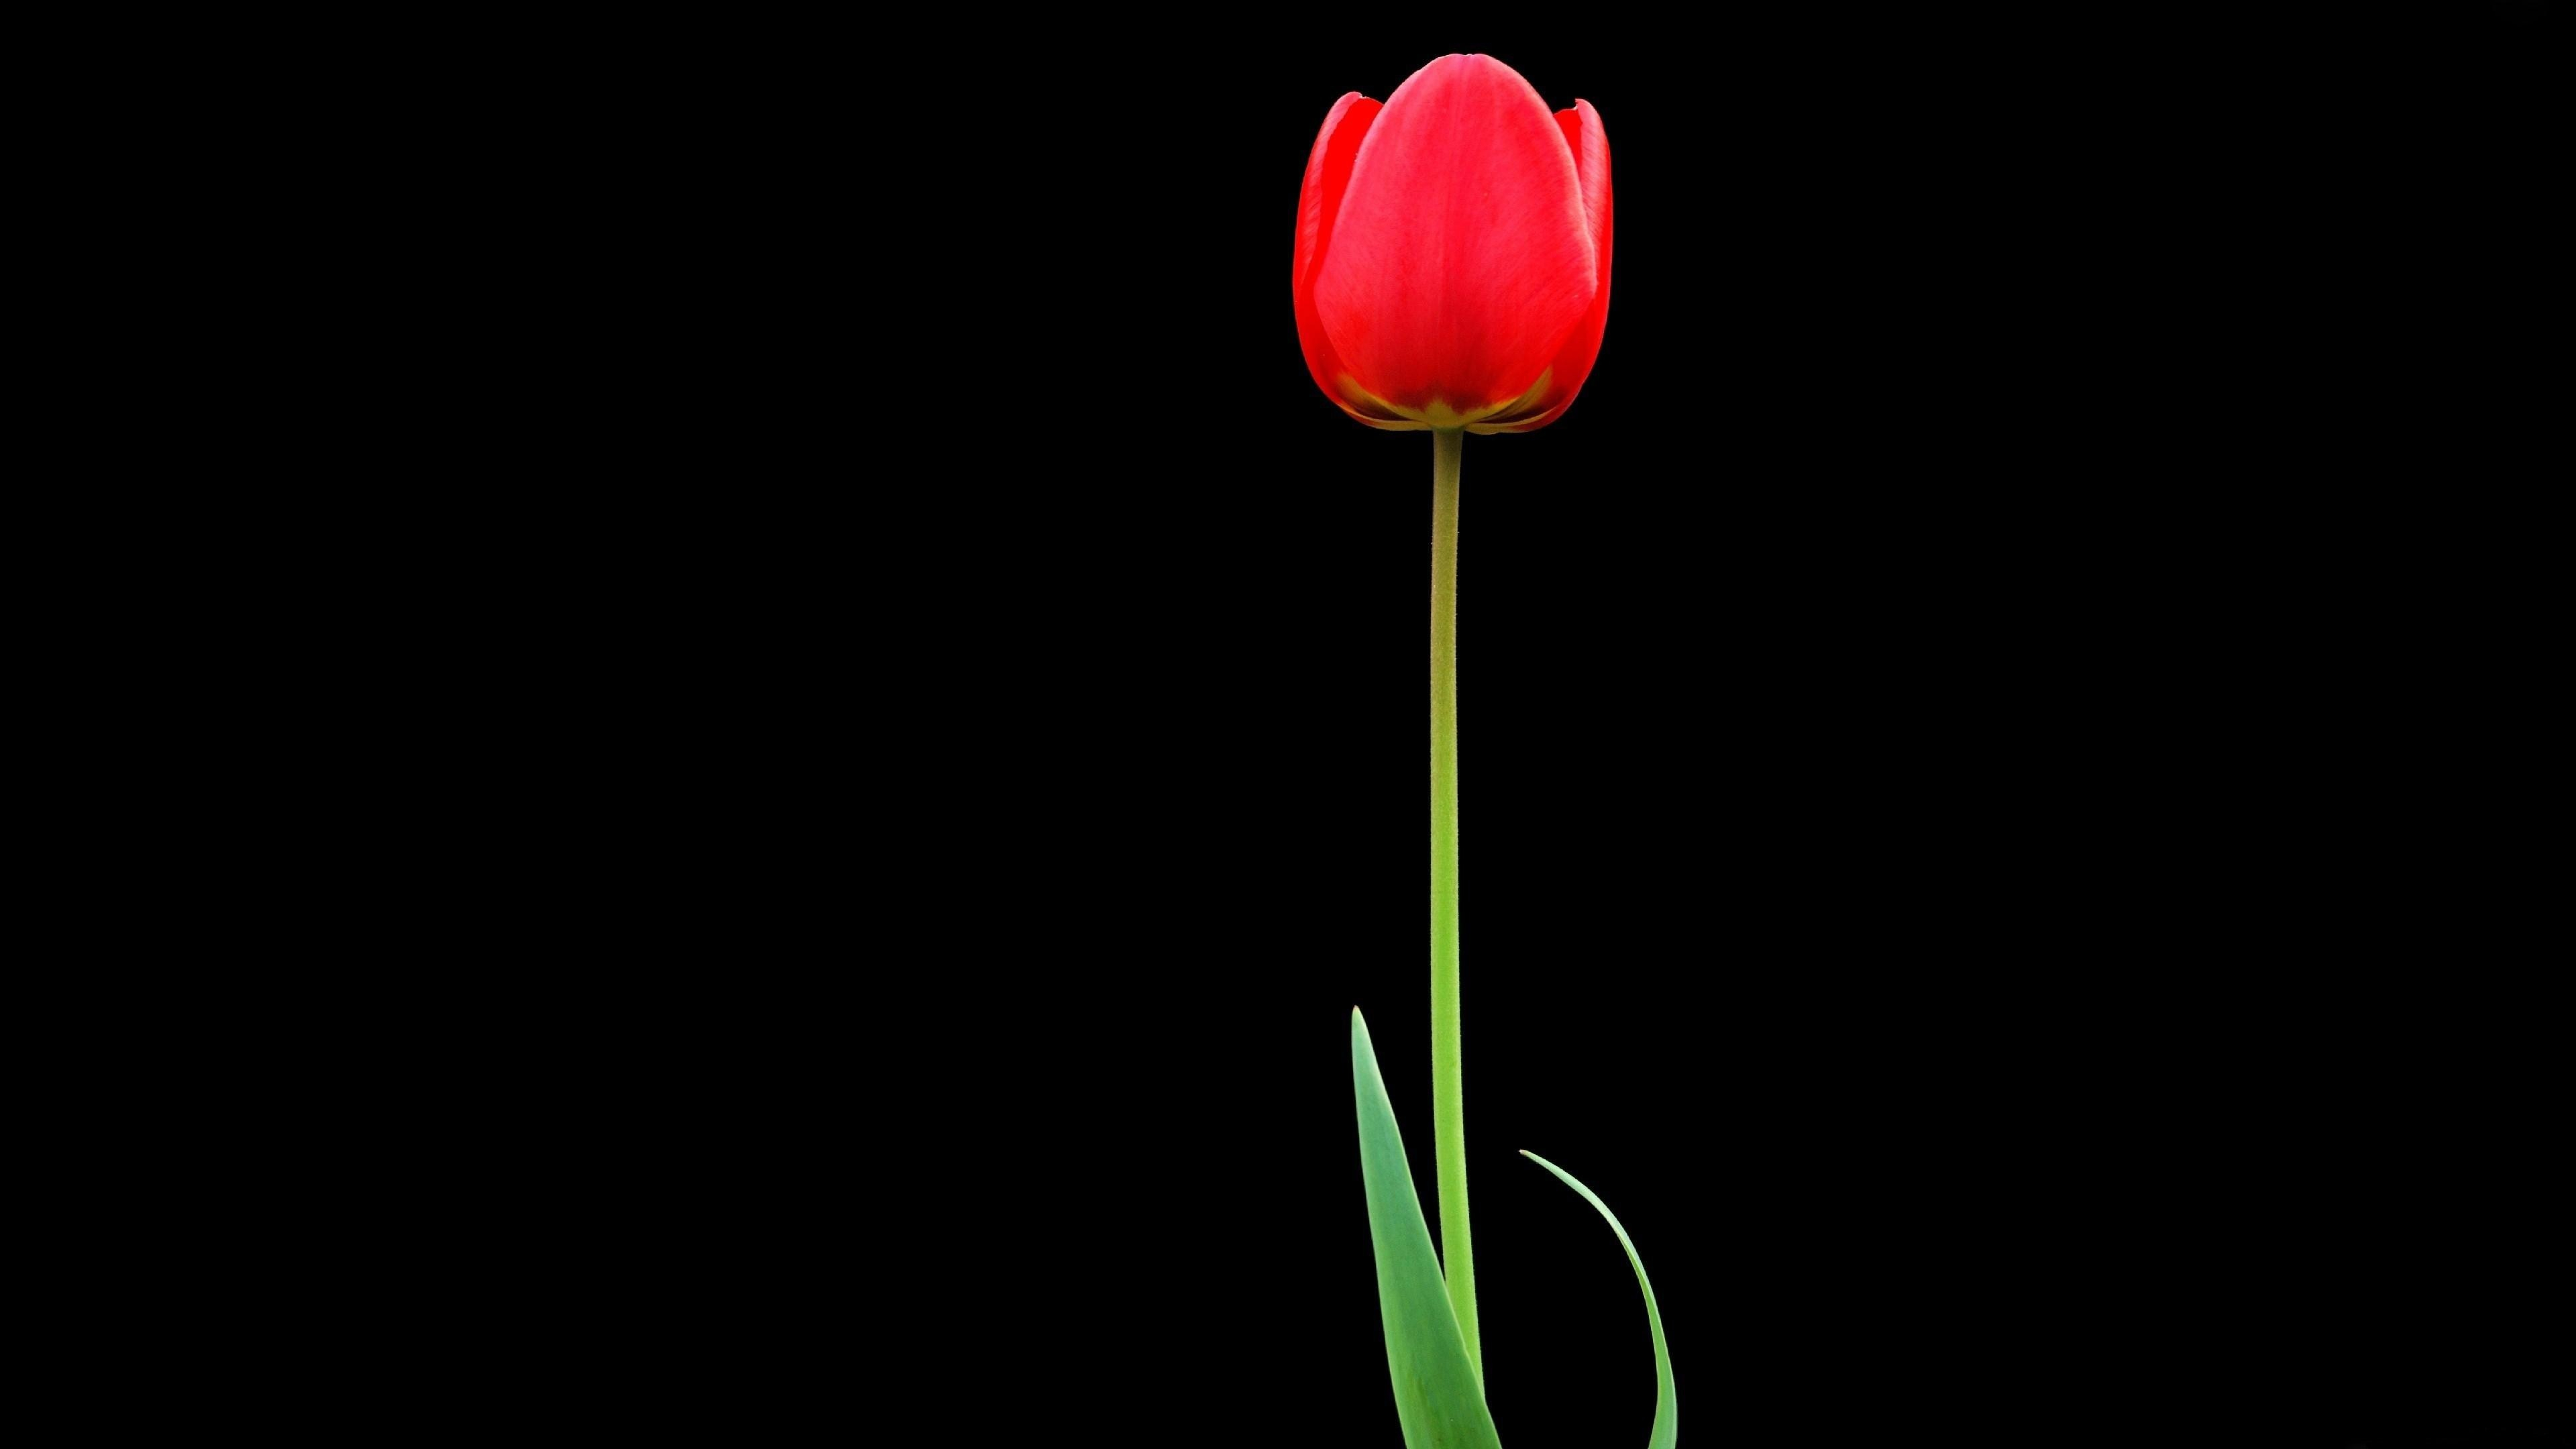 3840x2160 Tulip Red Flower Wallpaper [